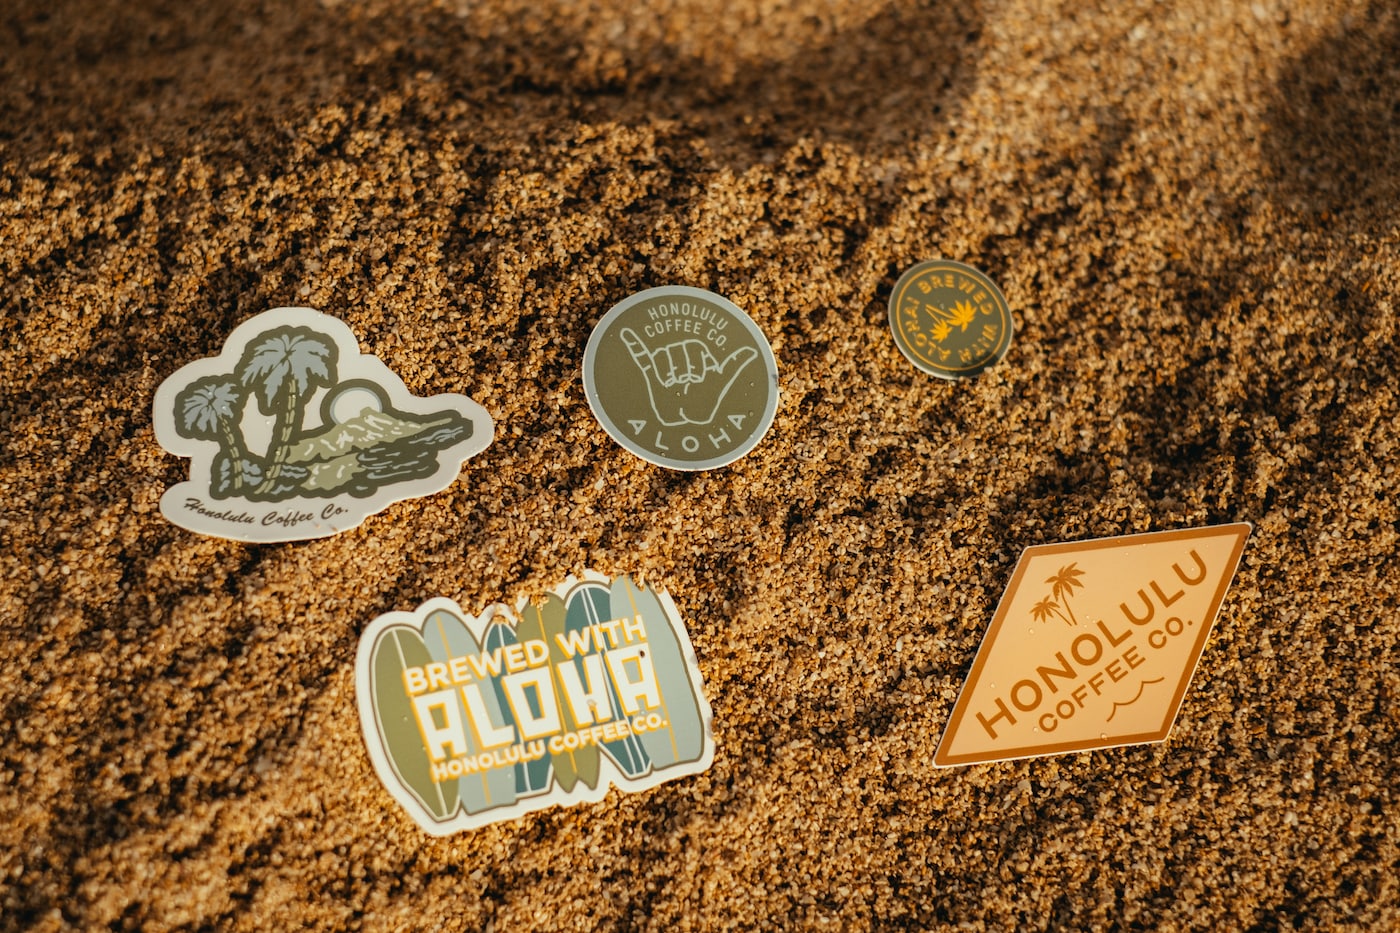 Honolulu Coffee stickers in the sand